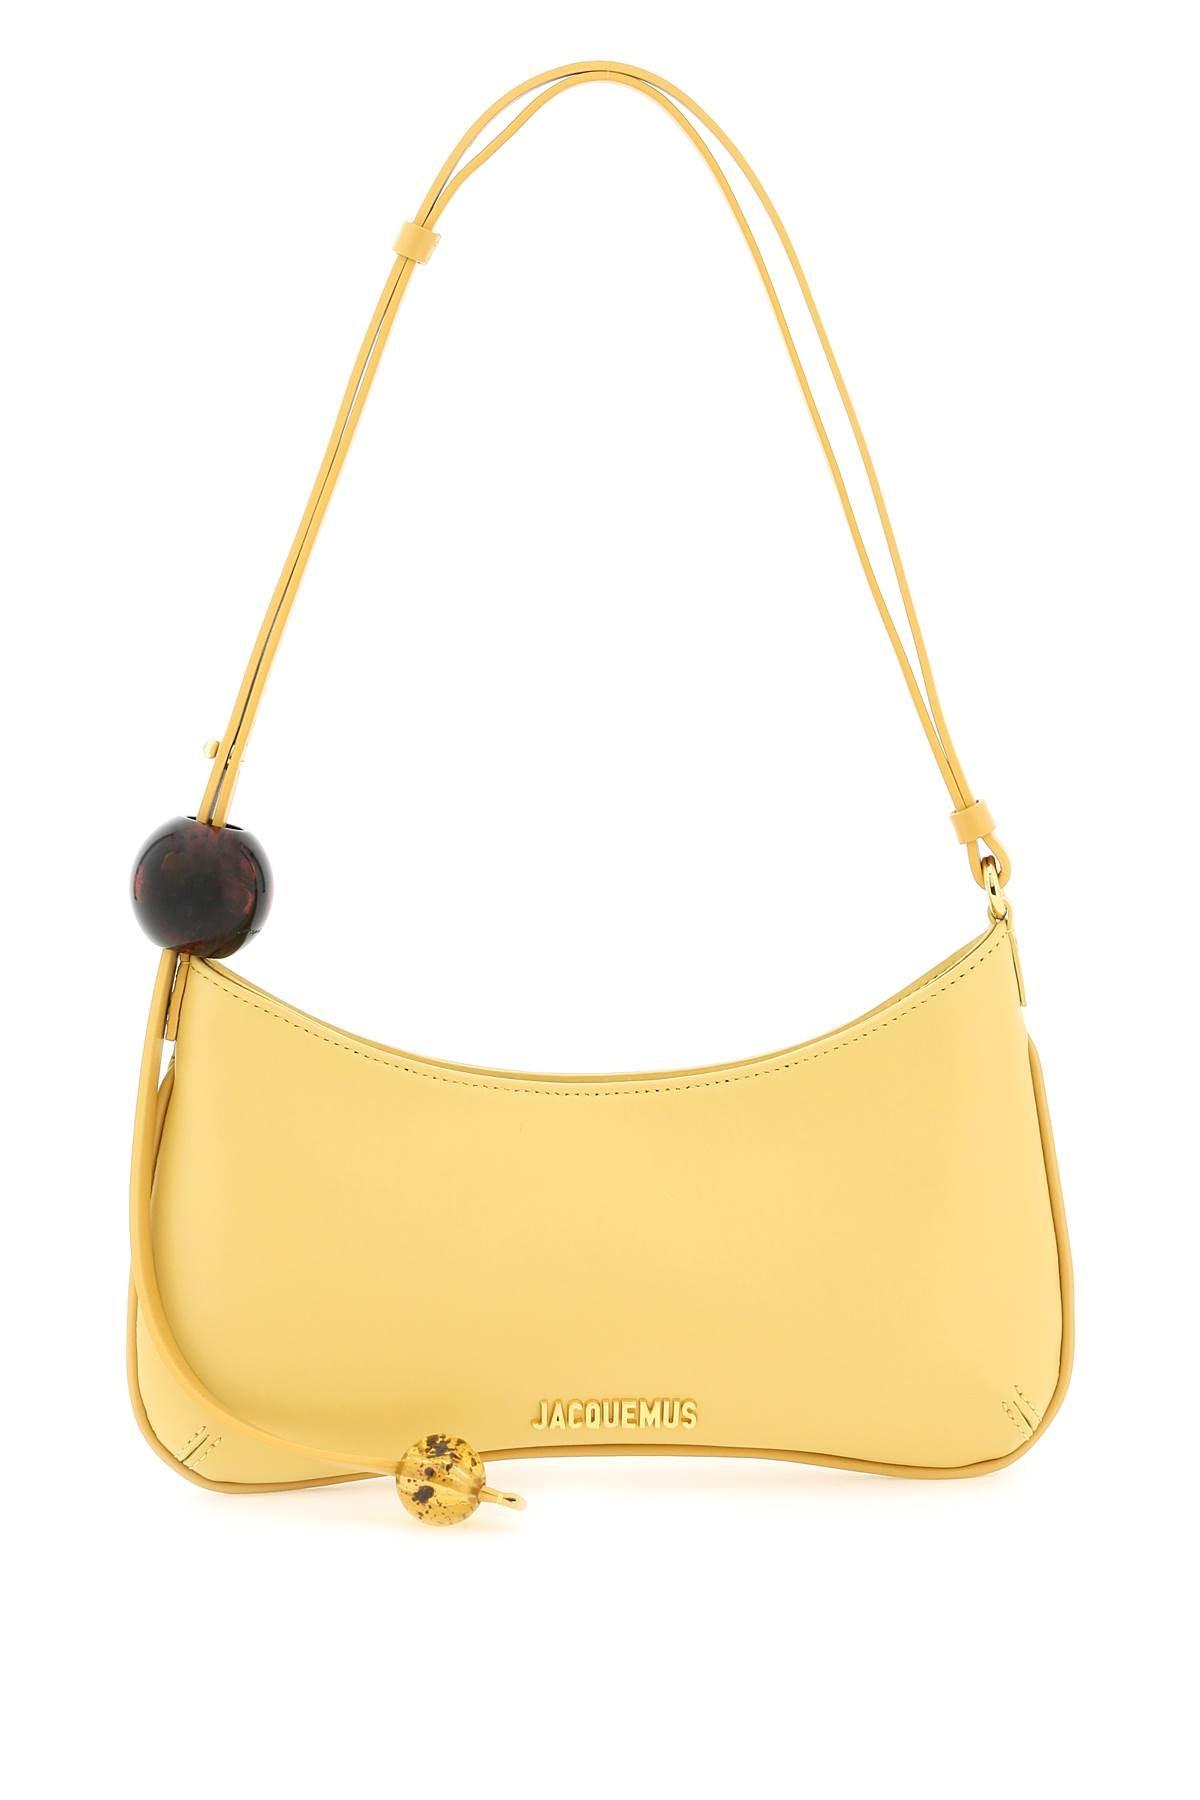 Jacquemus 'le Bisou Perle' Shoulder Bag in Yellow | Lyst